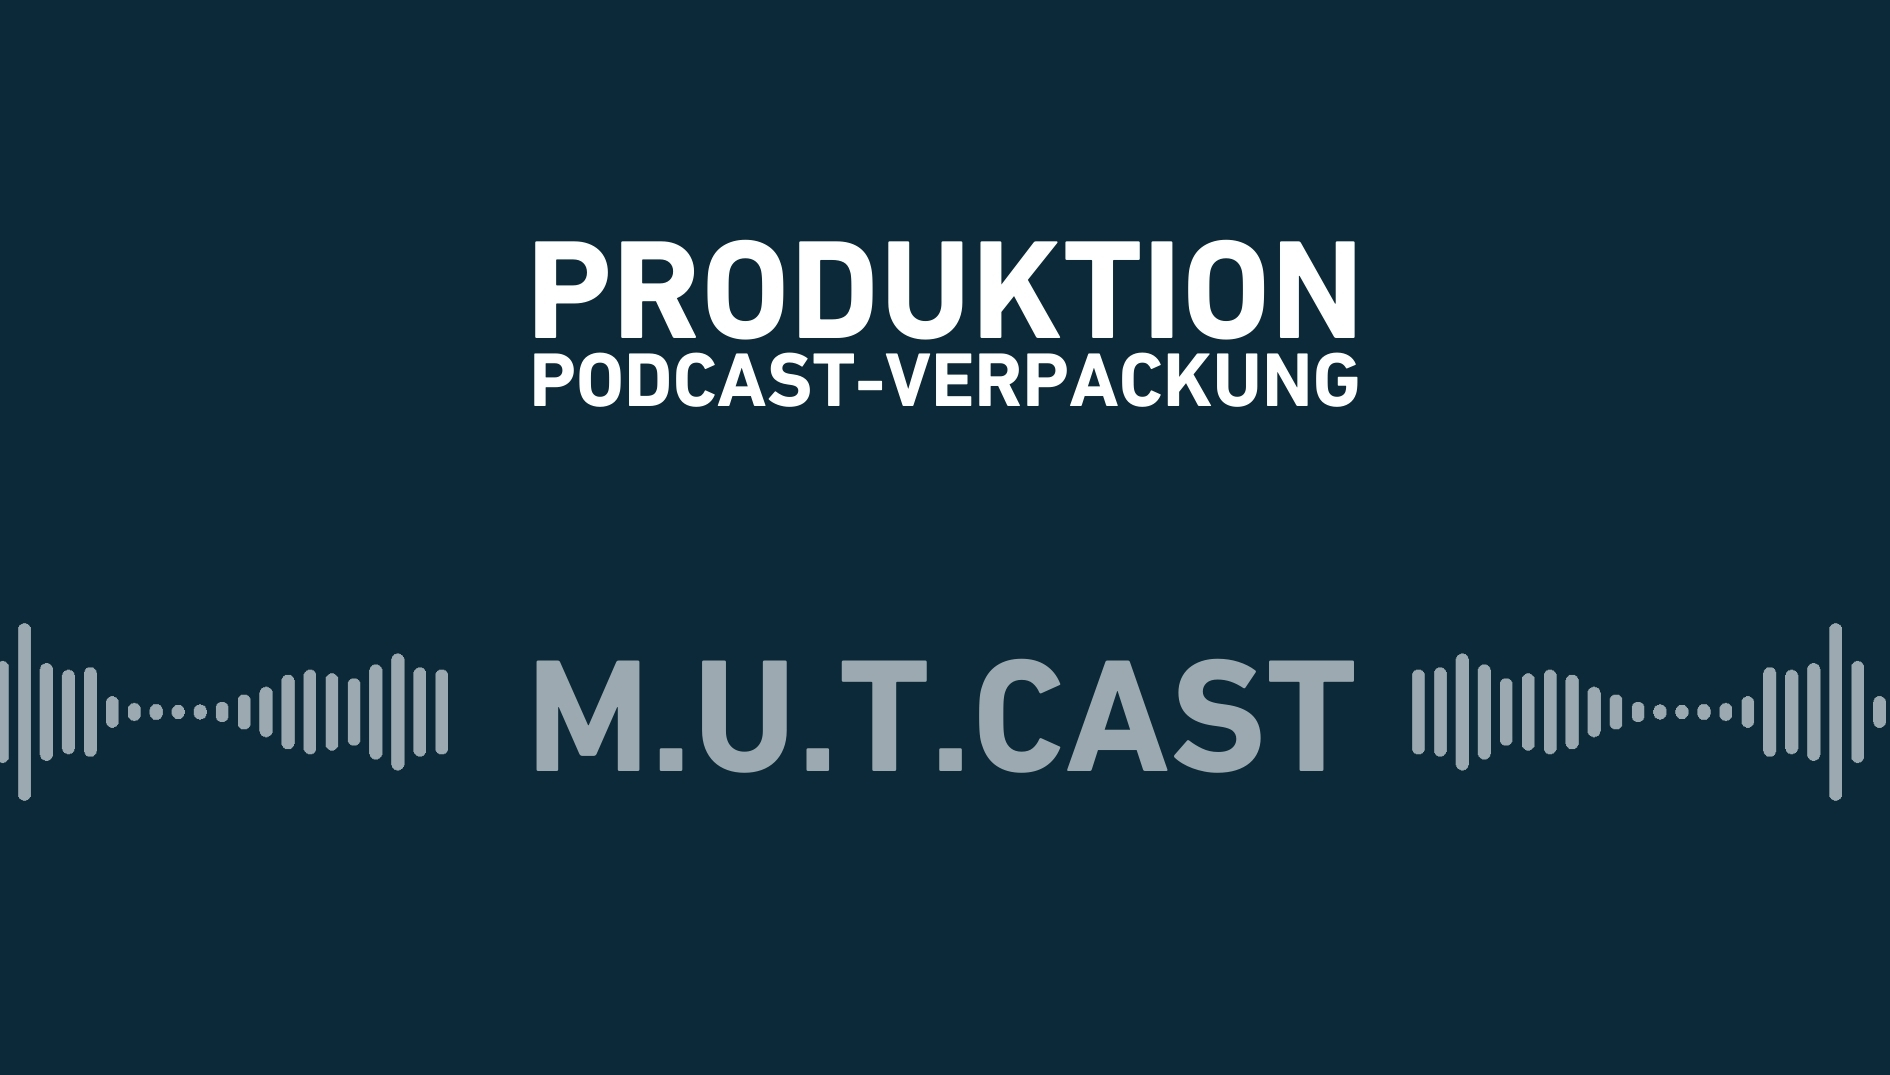 Podcast-Verpackung: M.U.T.cast.